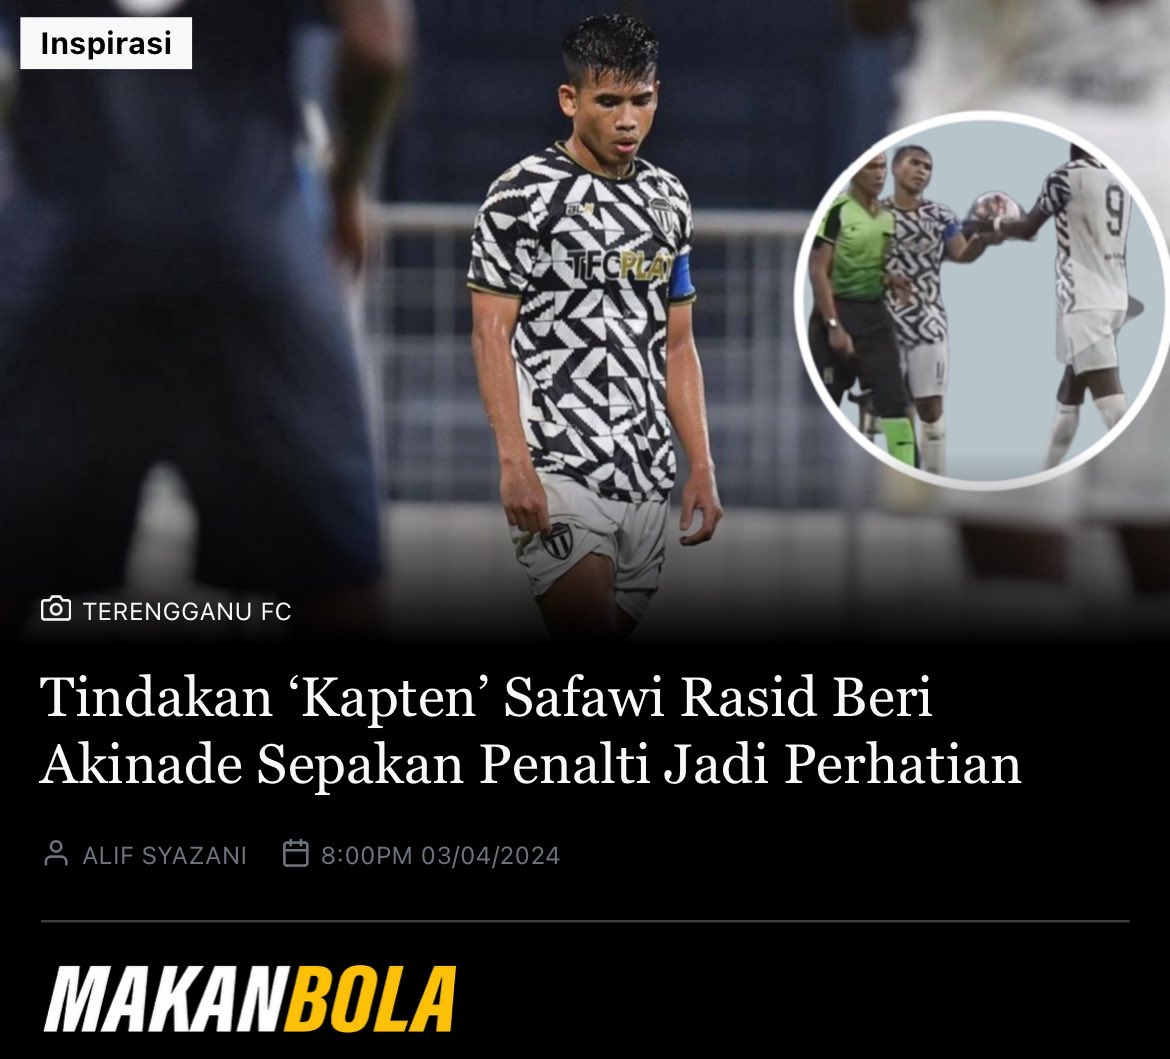 Safawi pamer aura seorang kapten.

Artikel penuh: makanbola.com/tindakan-kapte…